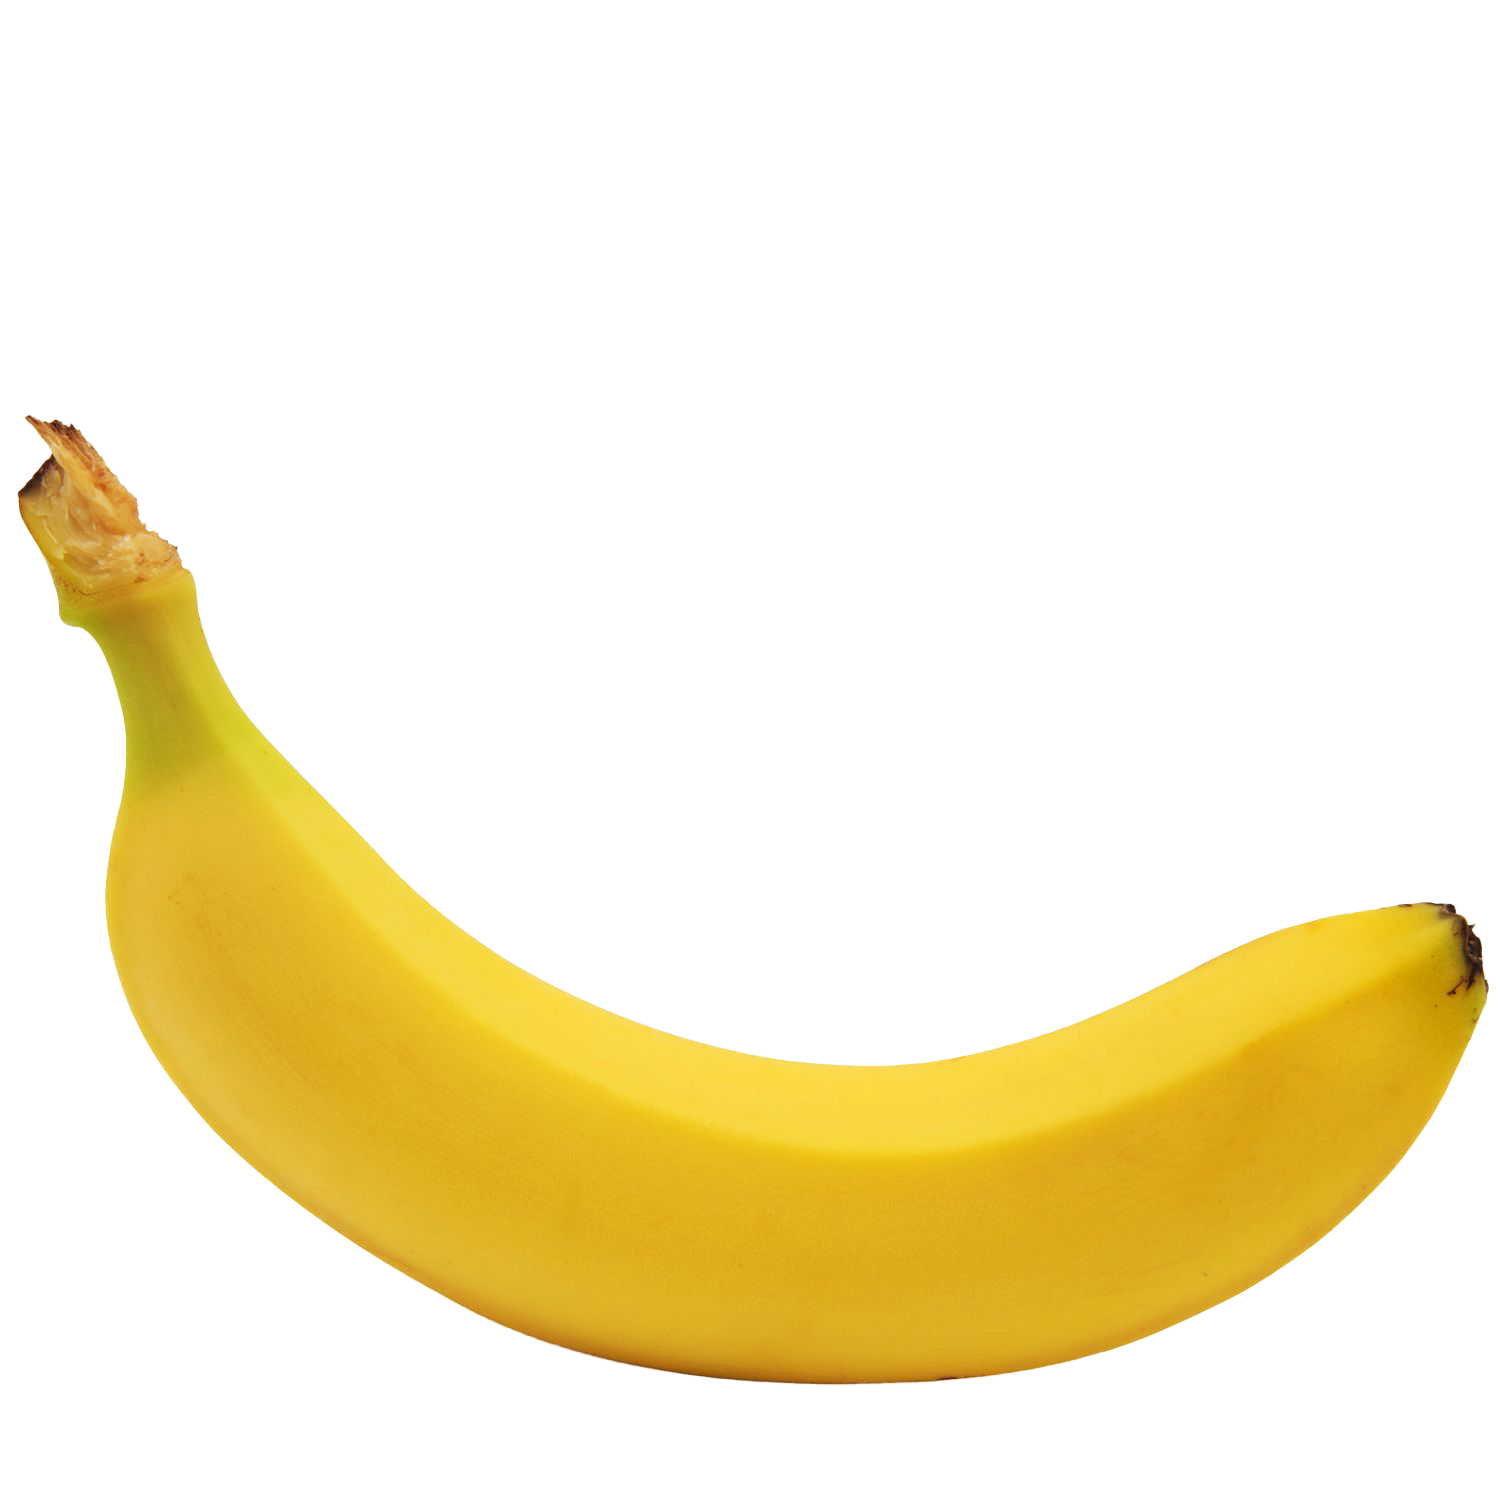 Banana Background PNG Image